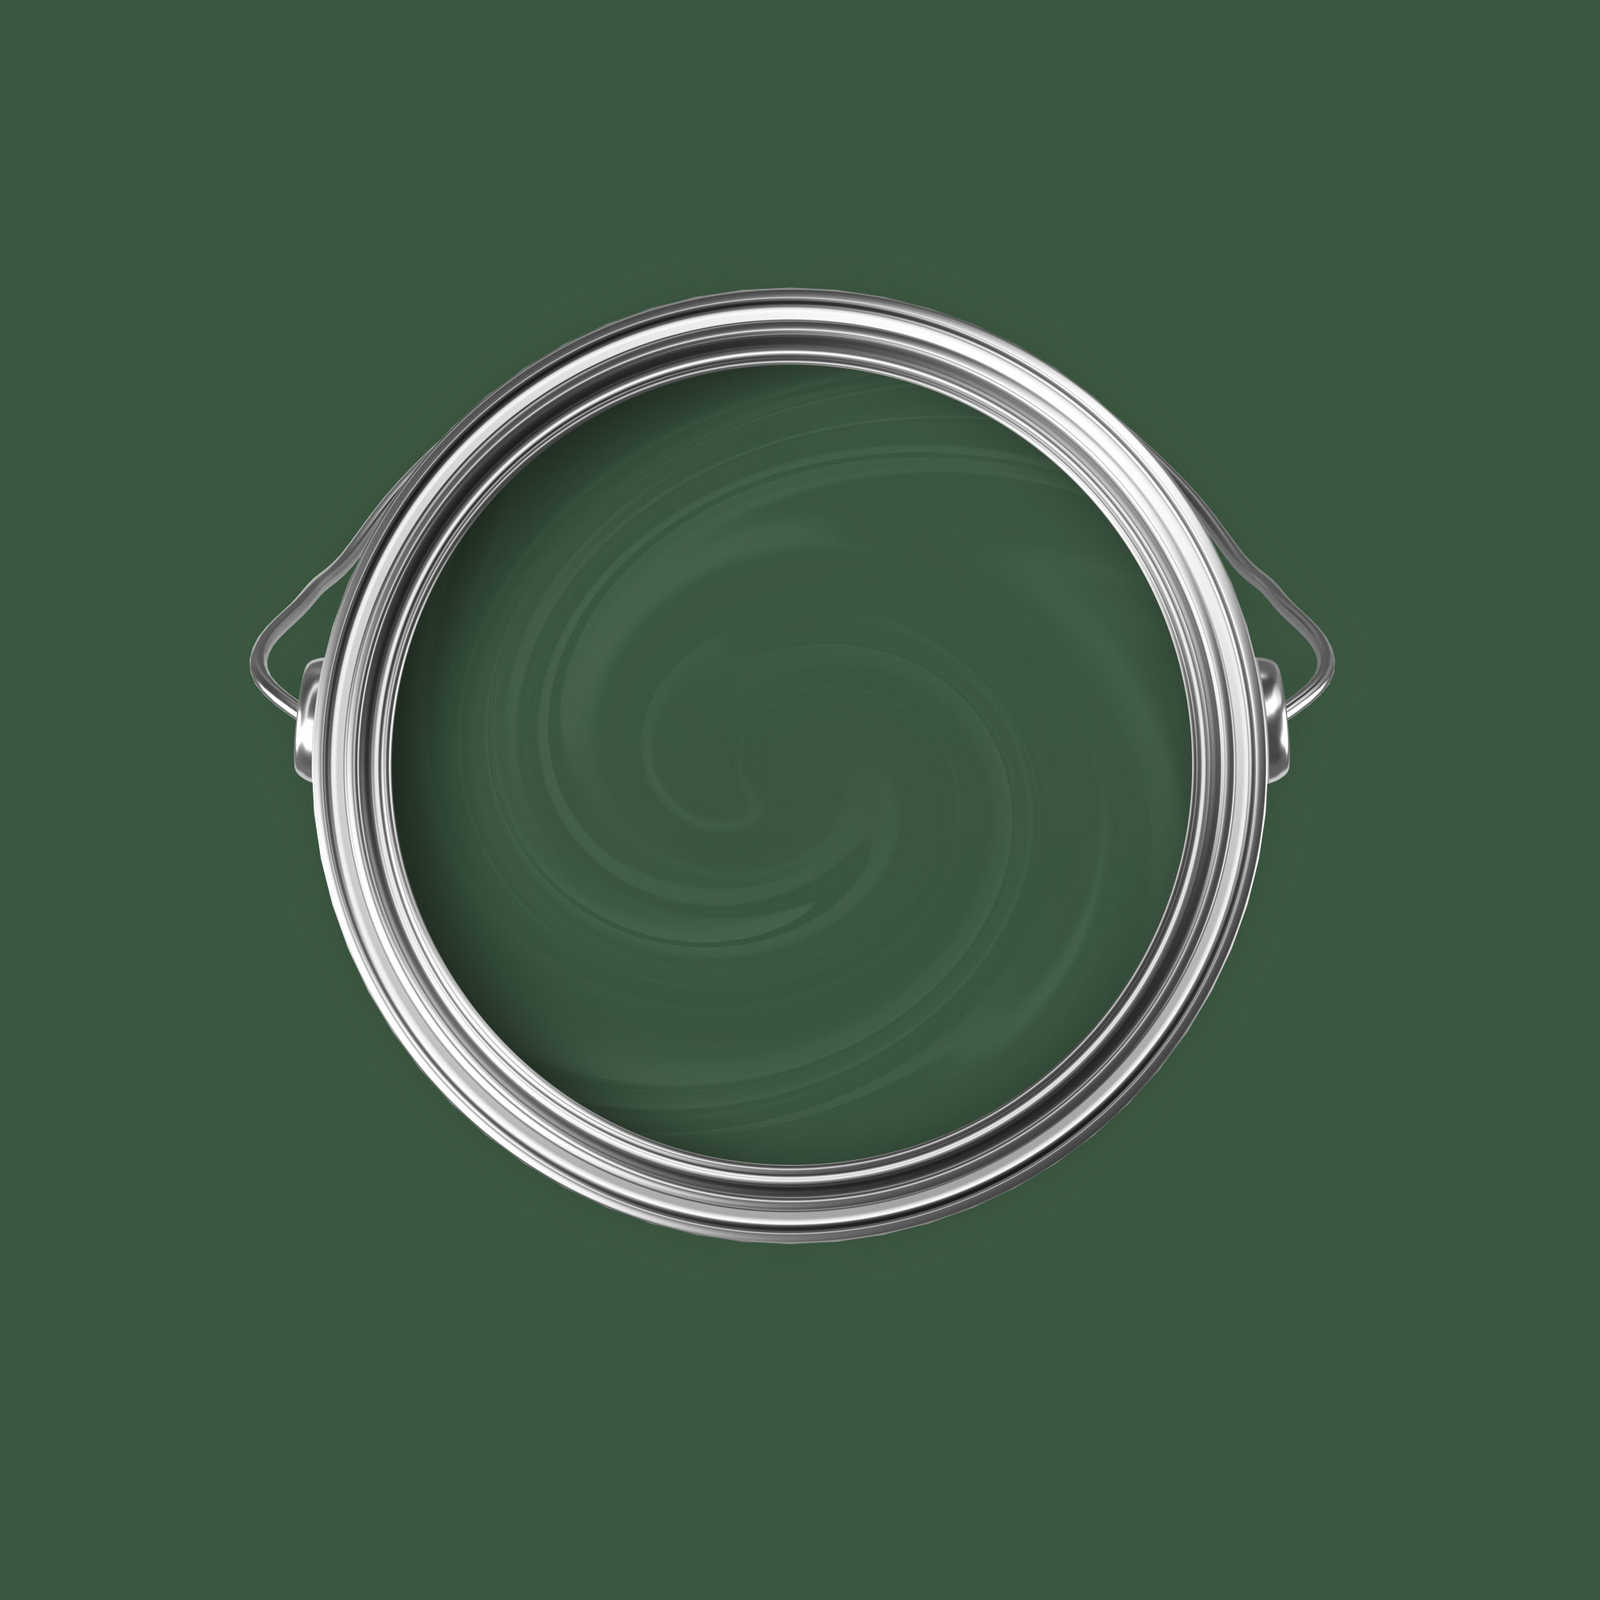             Premium Wall Paint Vivid Moss Green »Gorgeous Green« NW505 – 5 litre
        